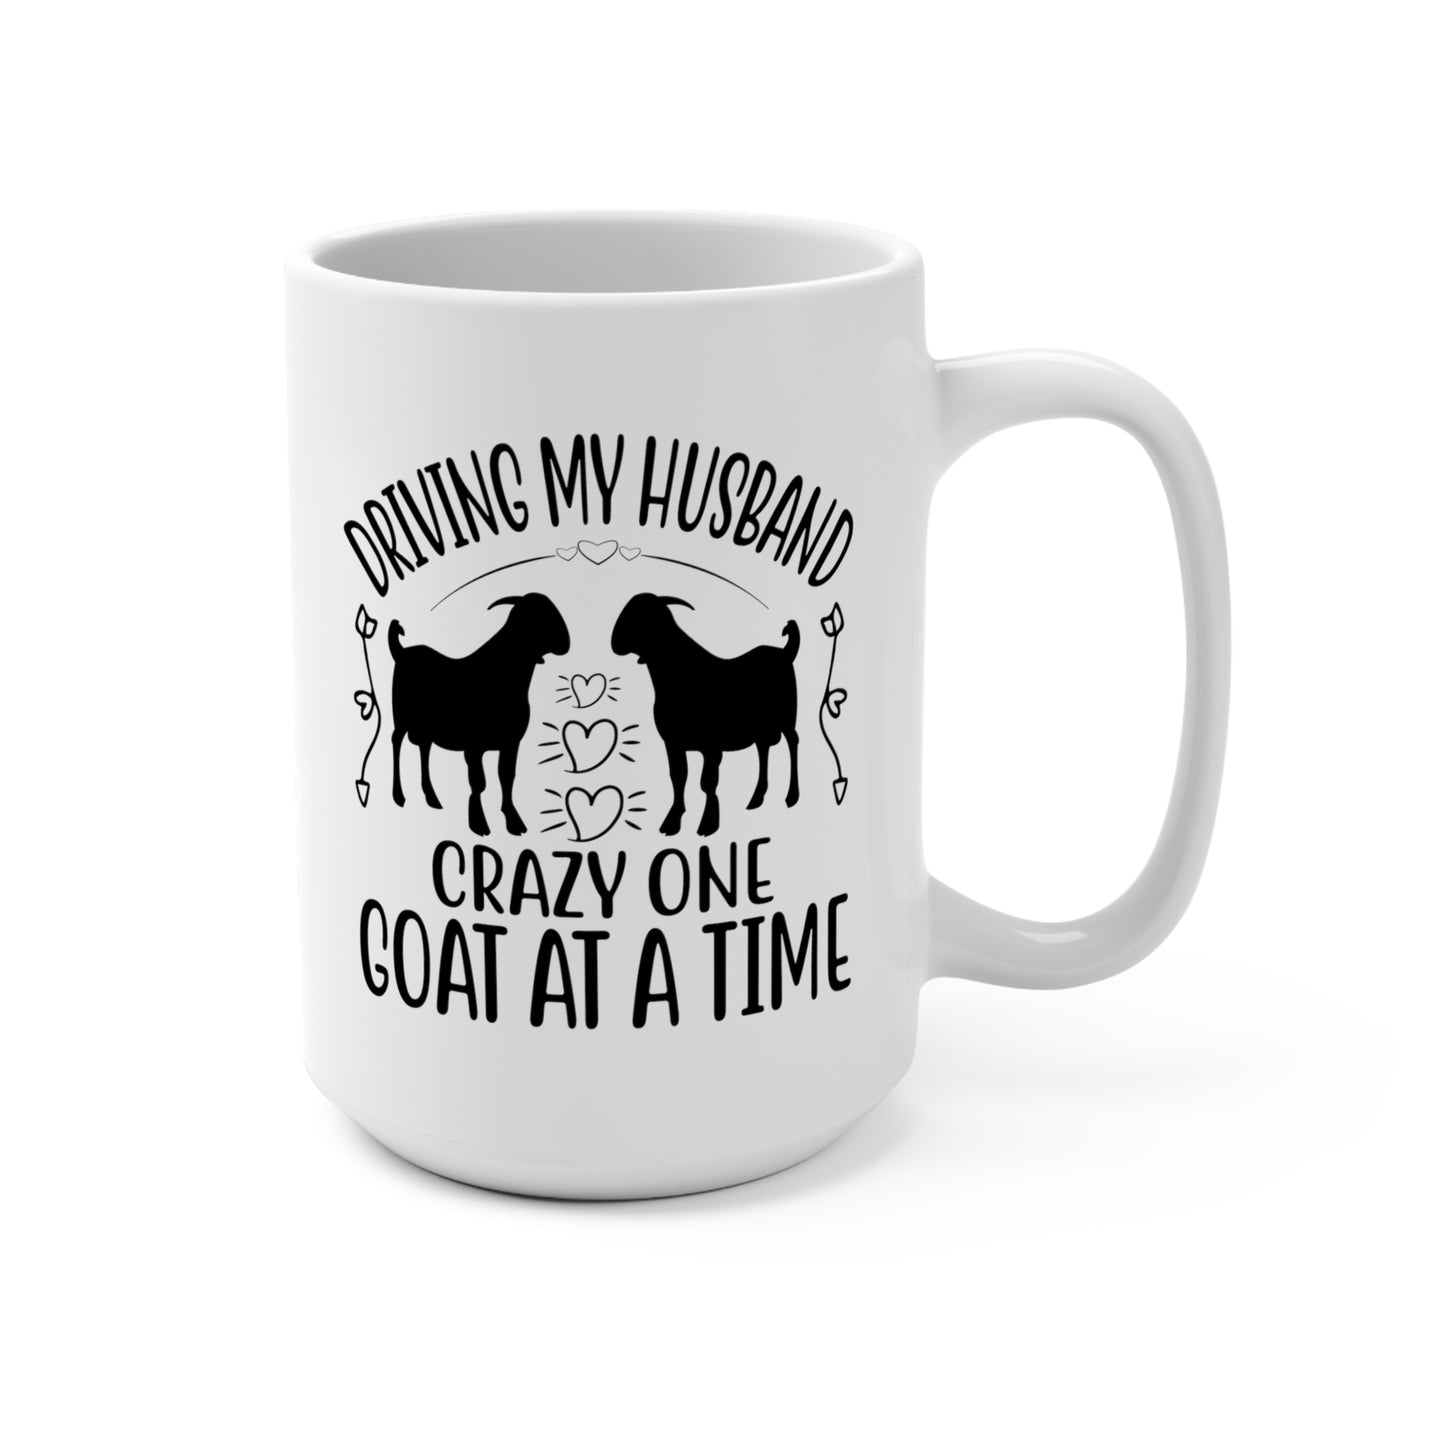 One Goat At A Time Mug